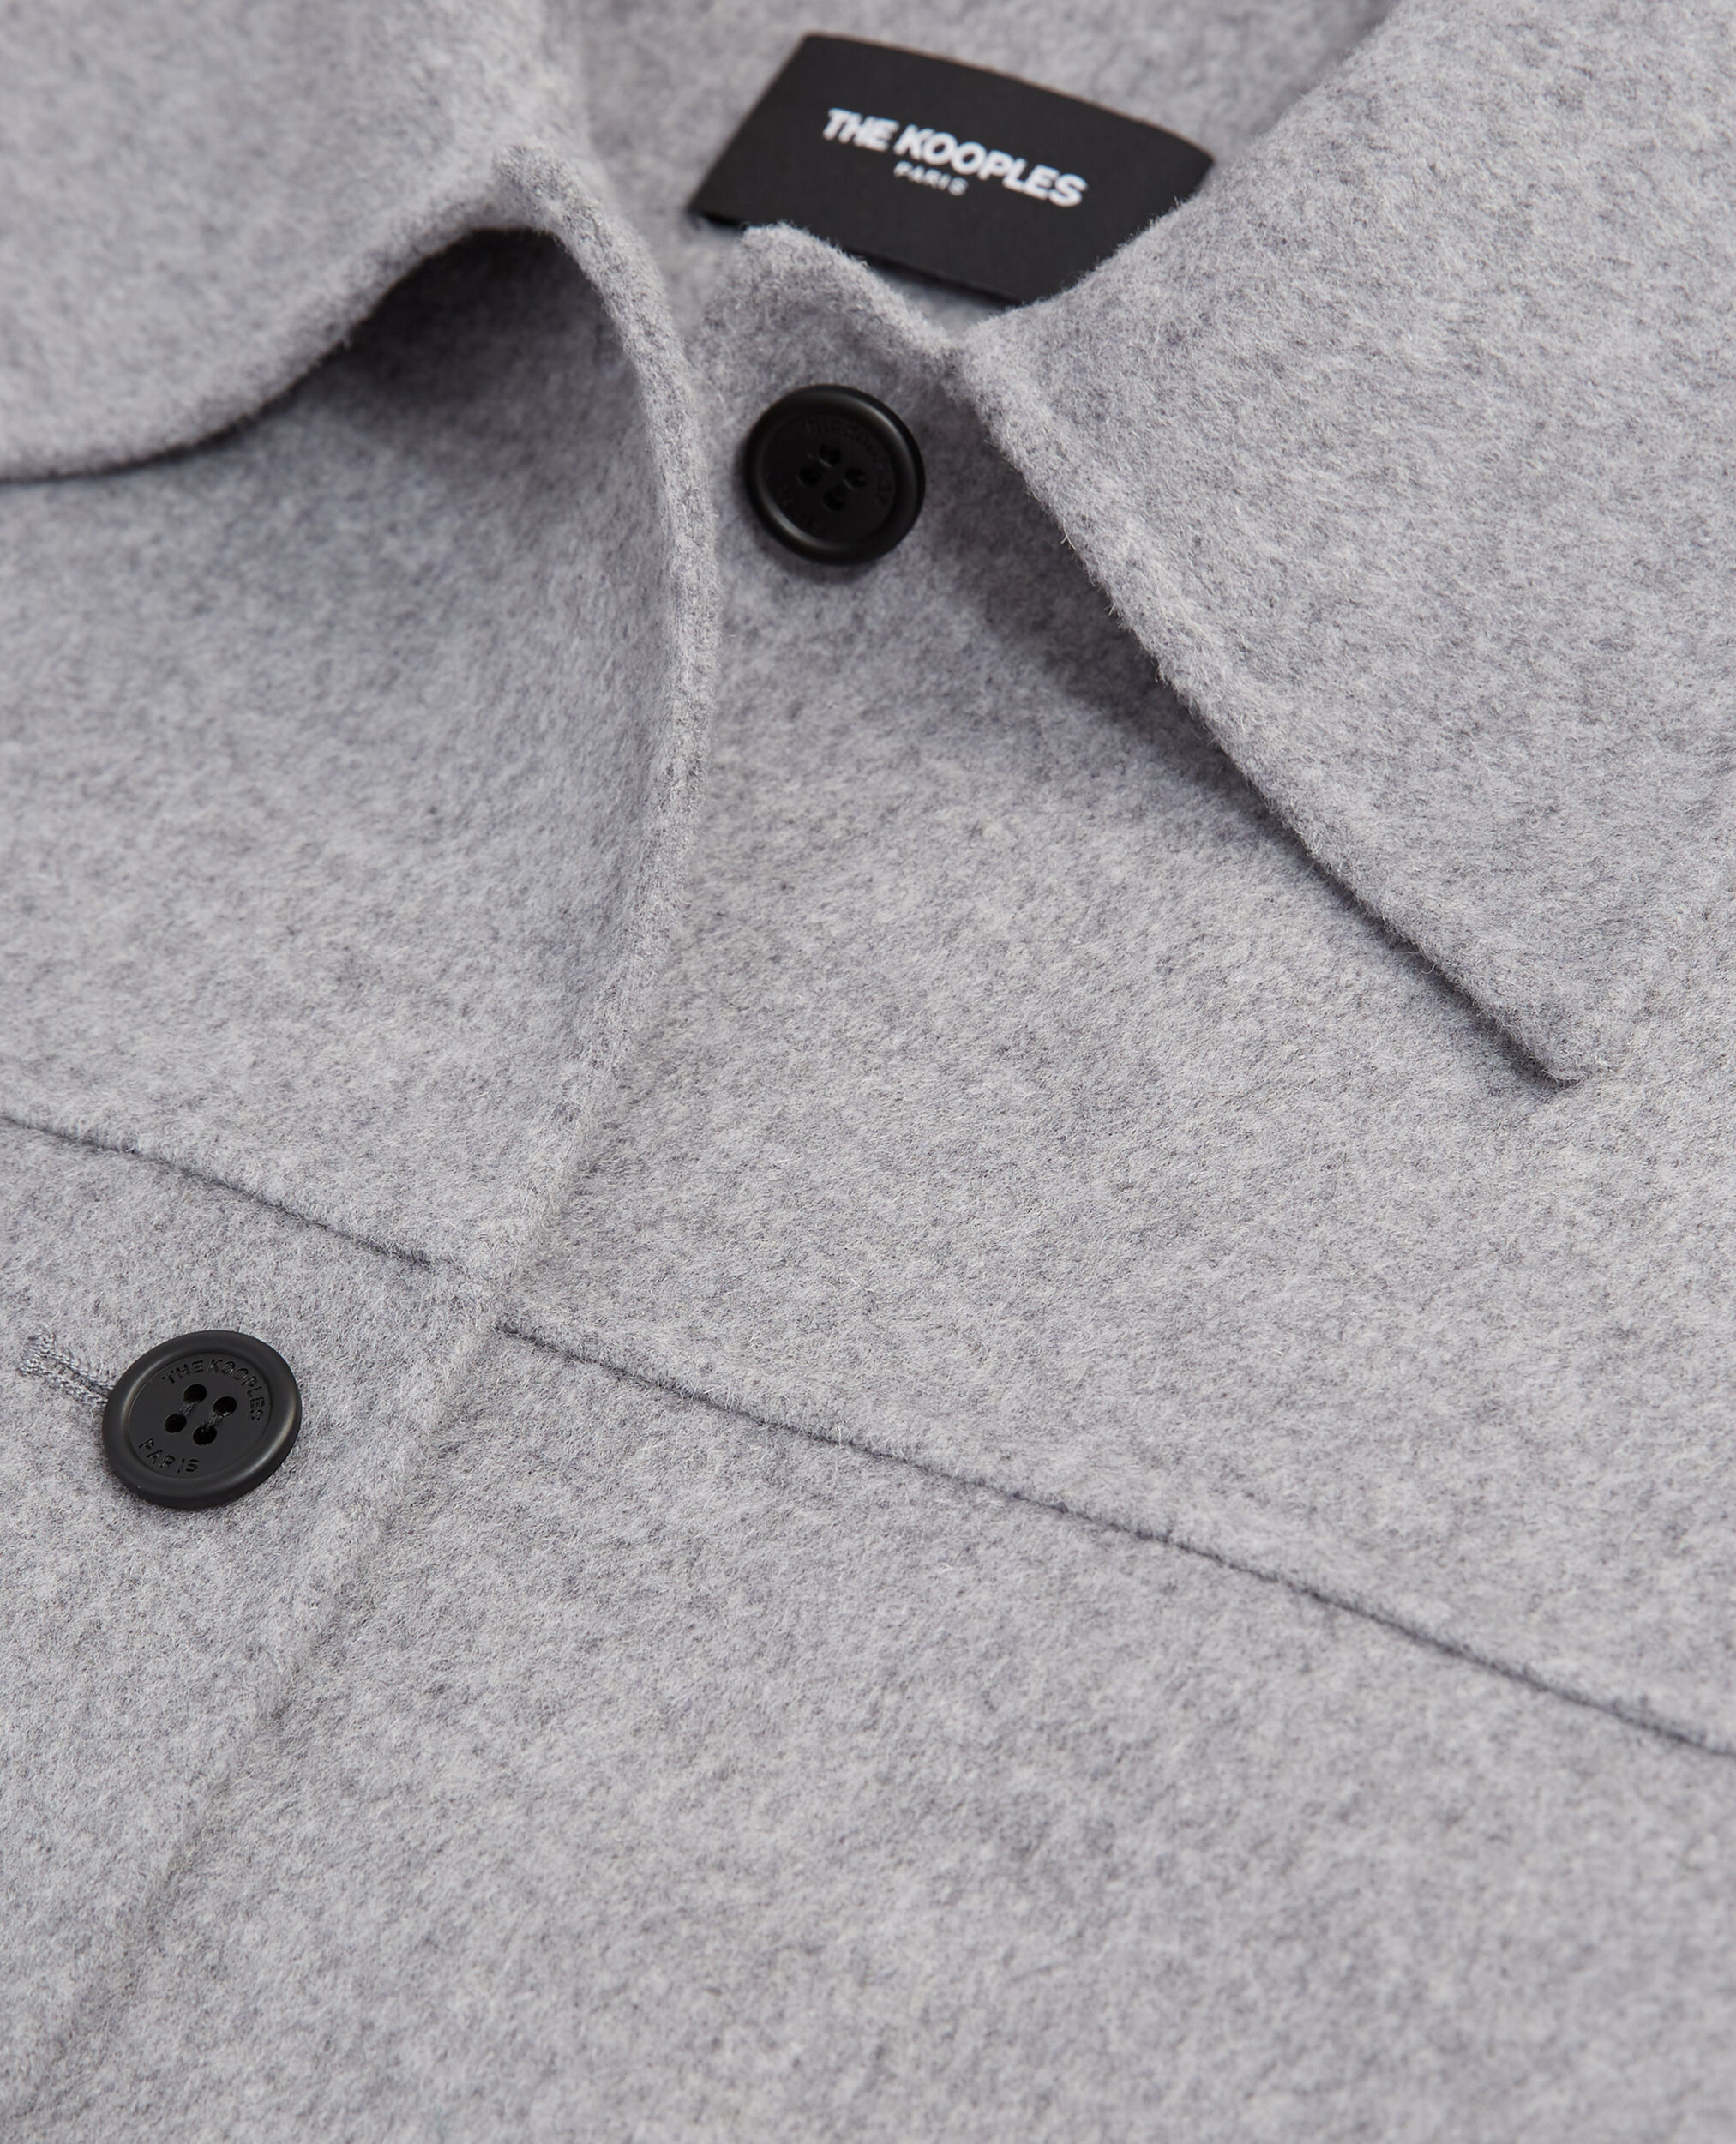 Chaqueta lana doble cara gris claro camisa, GREY, hi-res image number null